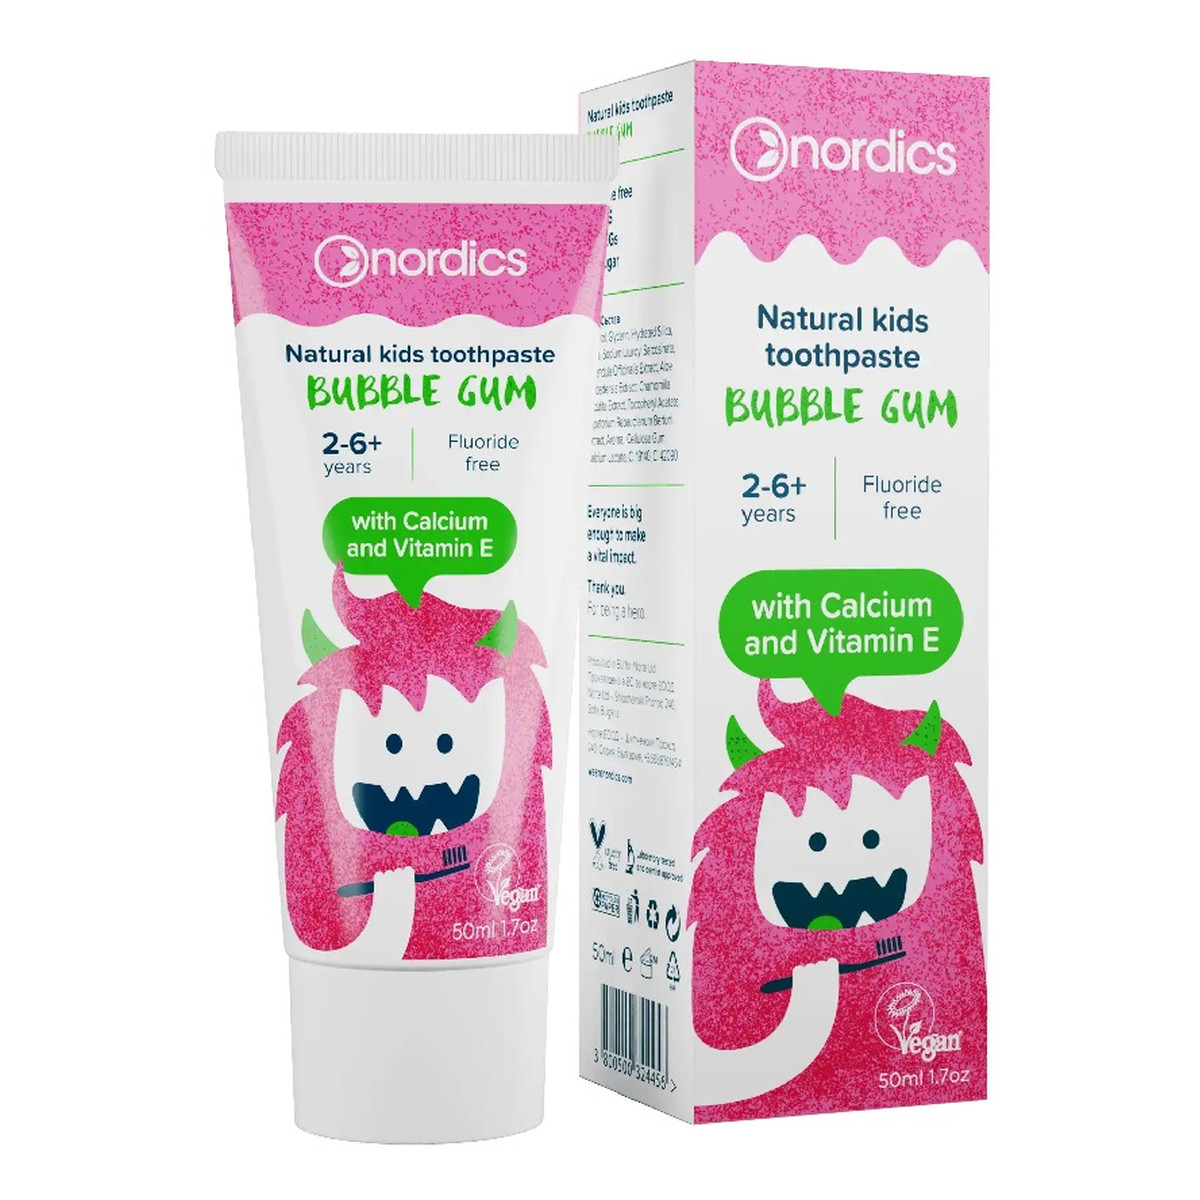 Nordics Natural kids toothpaste pasta bez fluoru dla dzieci 2-6+ lat guma balonowa 75ml